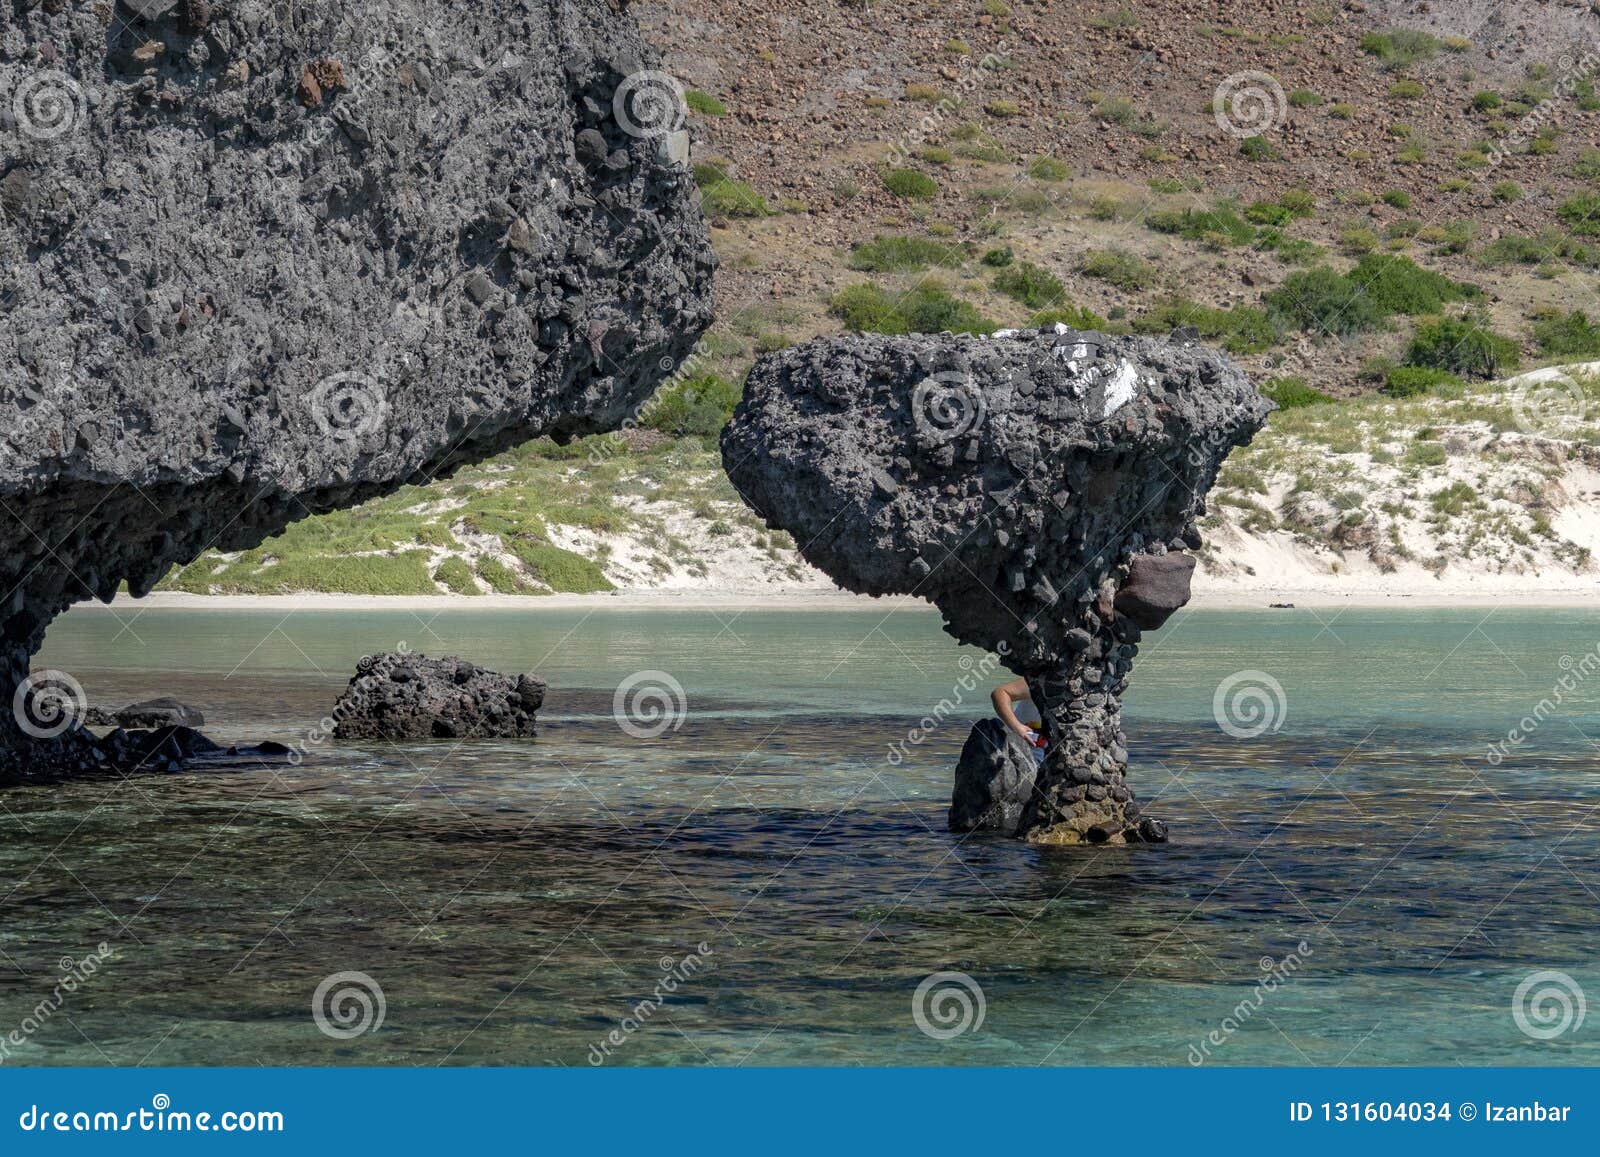 balandra beach suspended mushroom rock mexico baja california sur